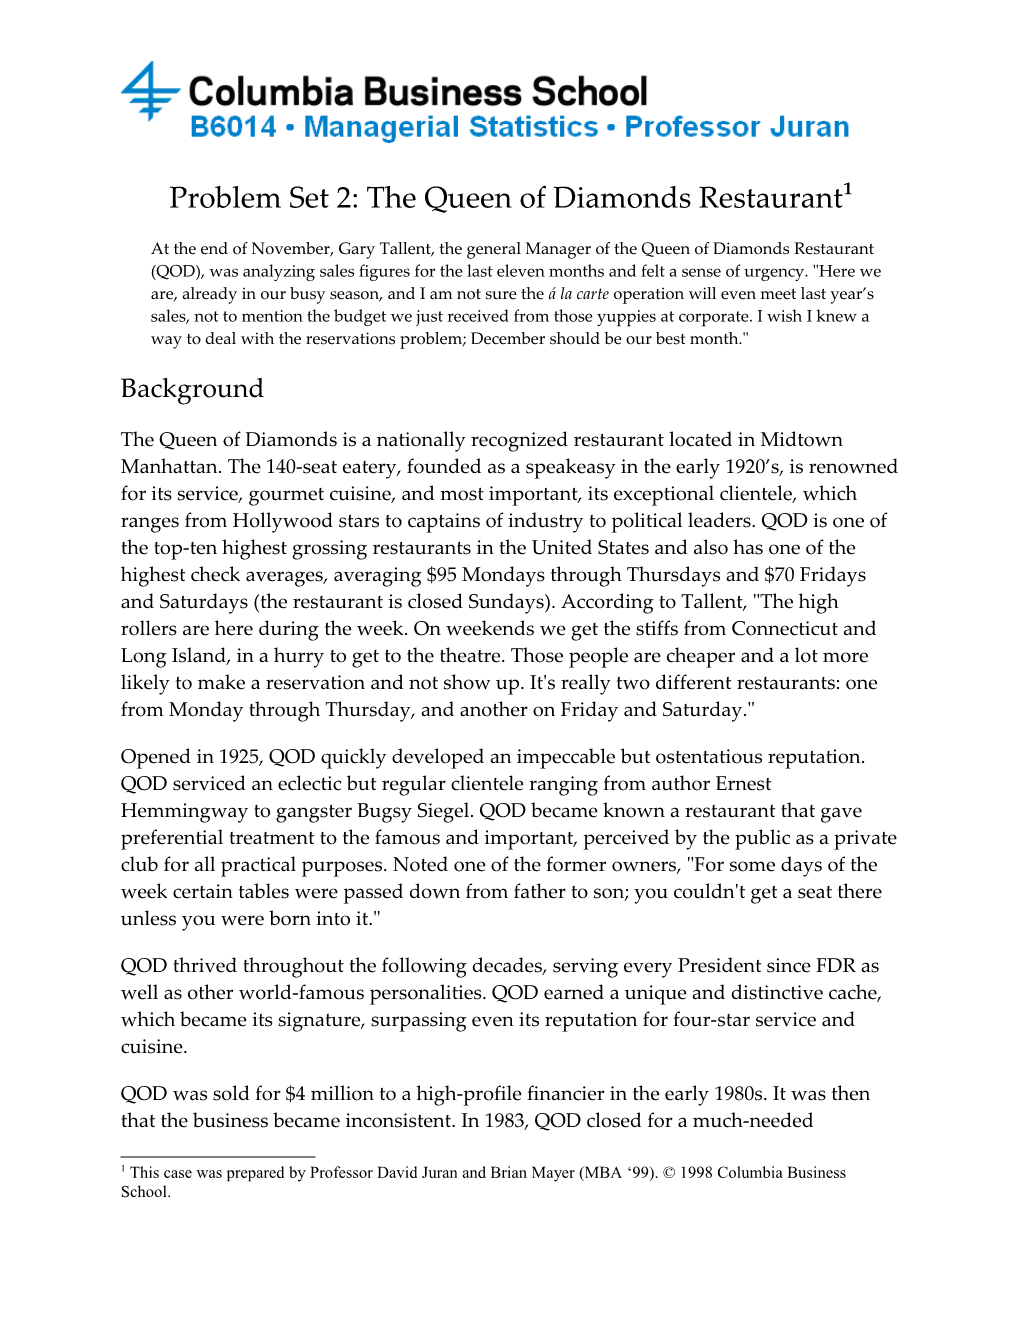 Problem Set 2: the Queen of Diamonds Restaurant 1